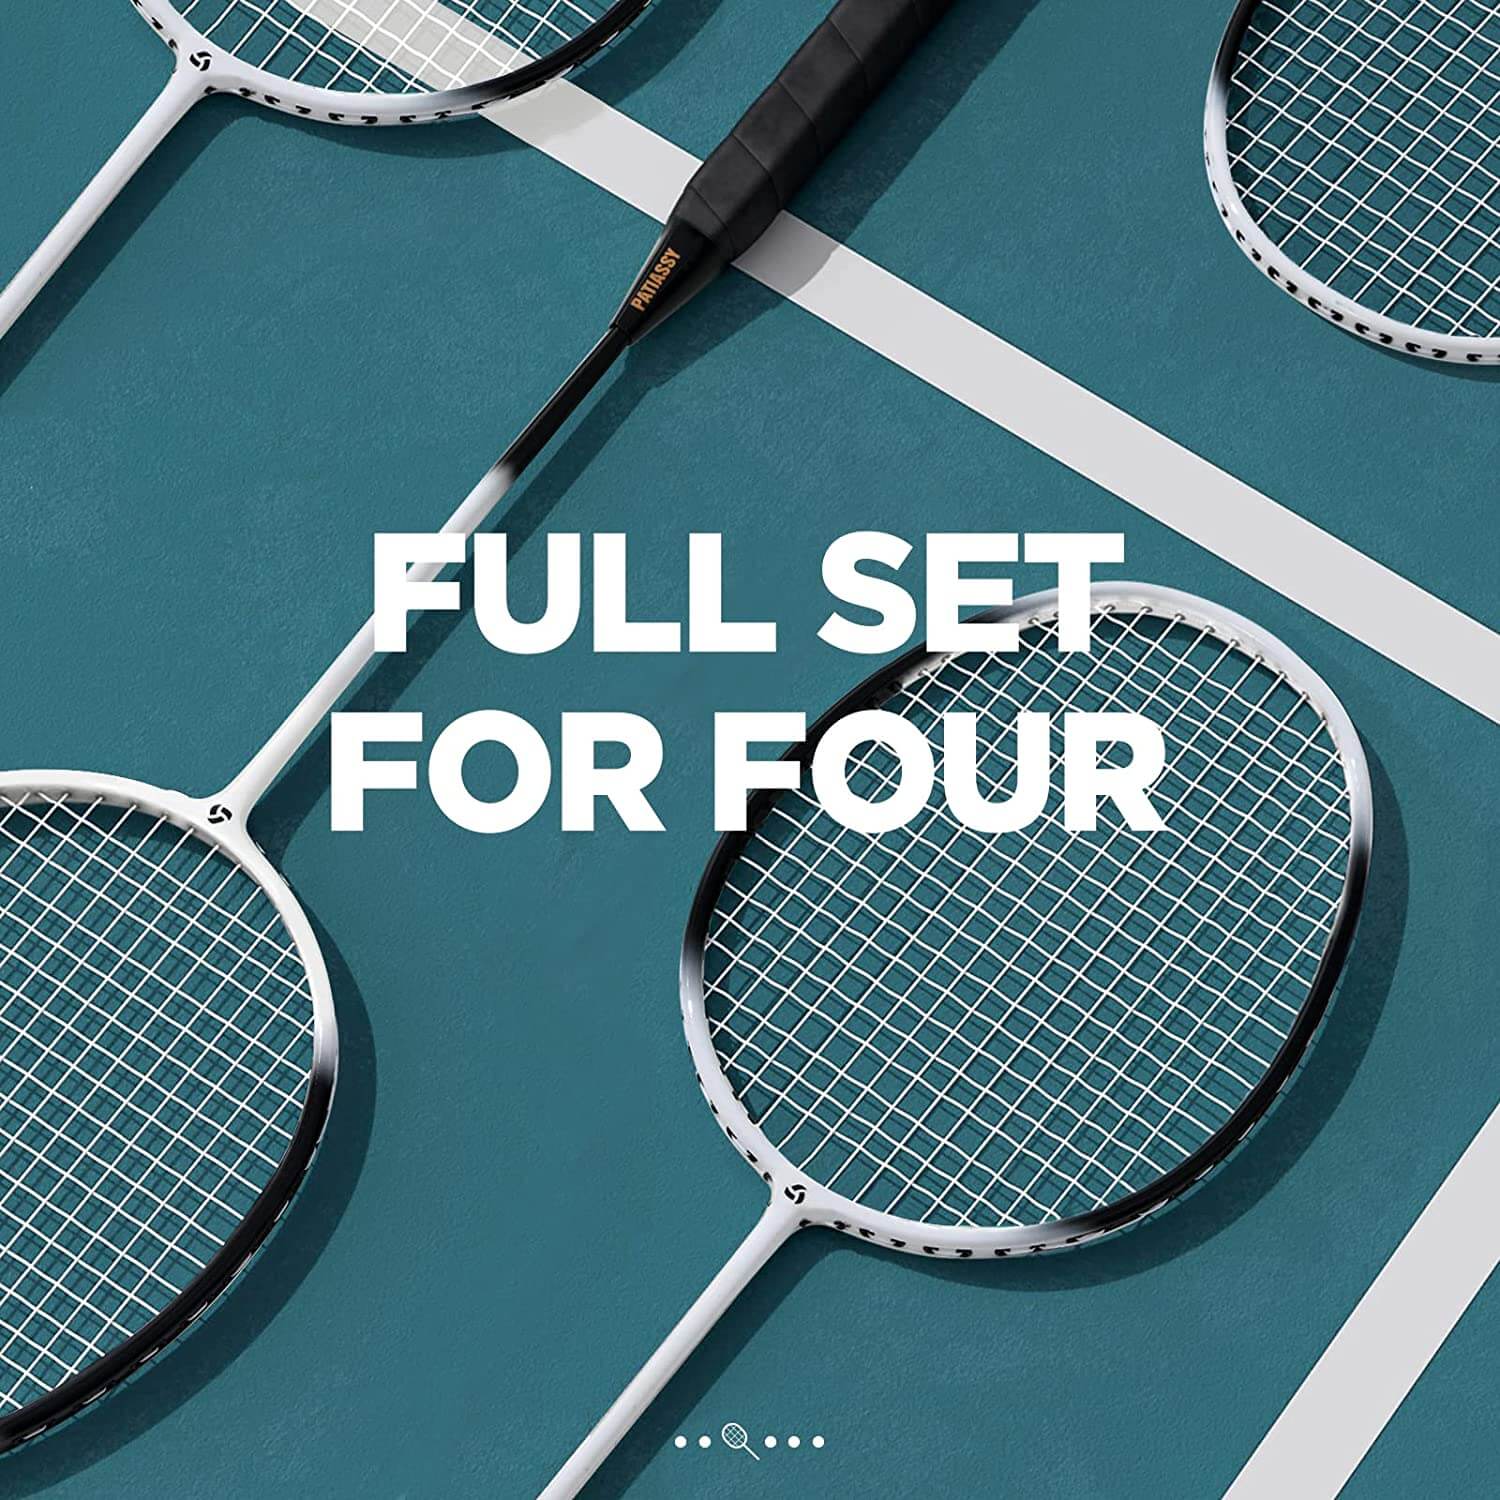 Patiassy Portable Badminton Set with Professional Badminton Net